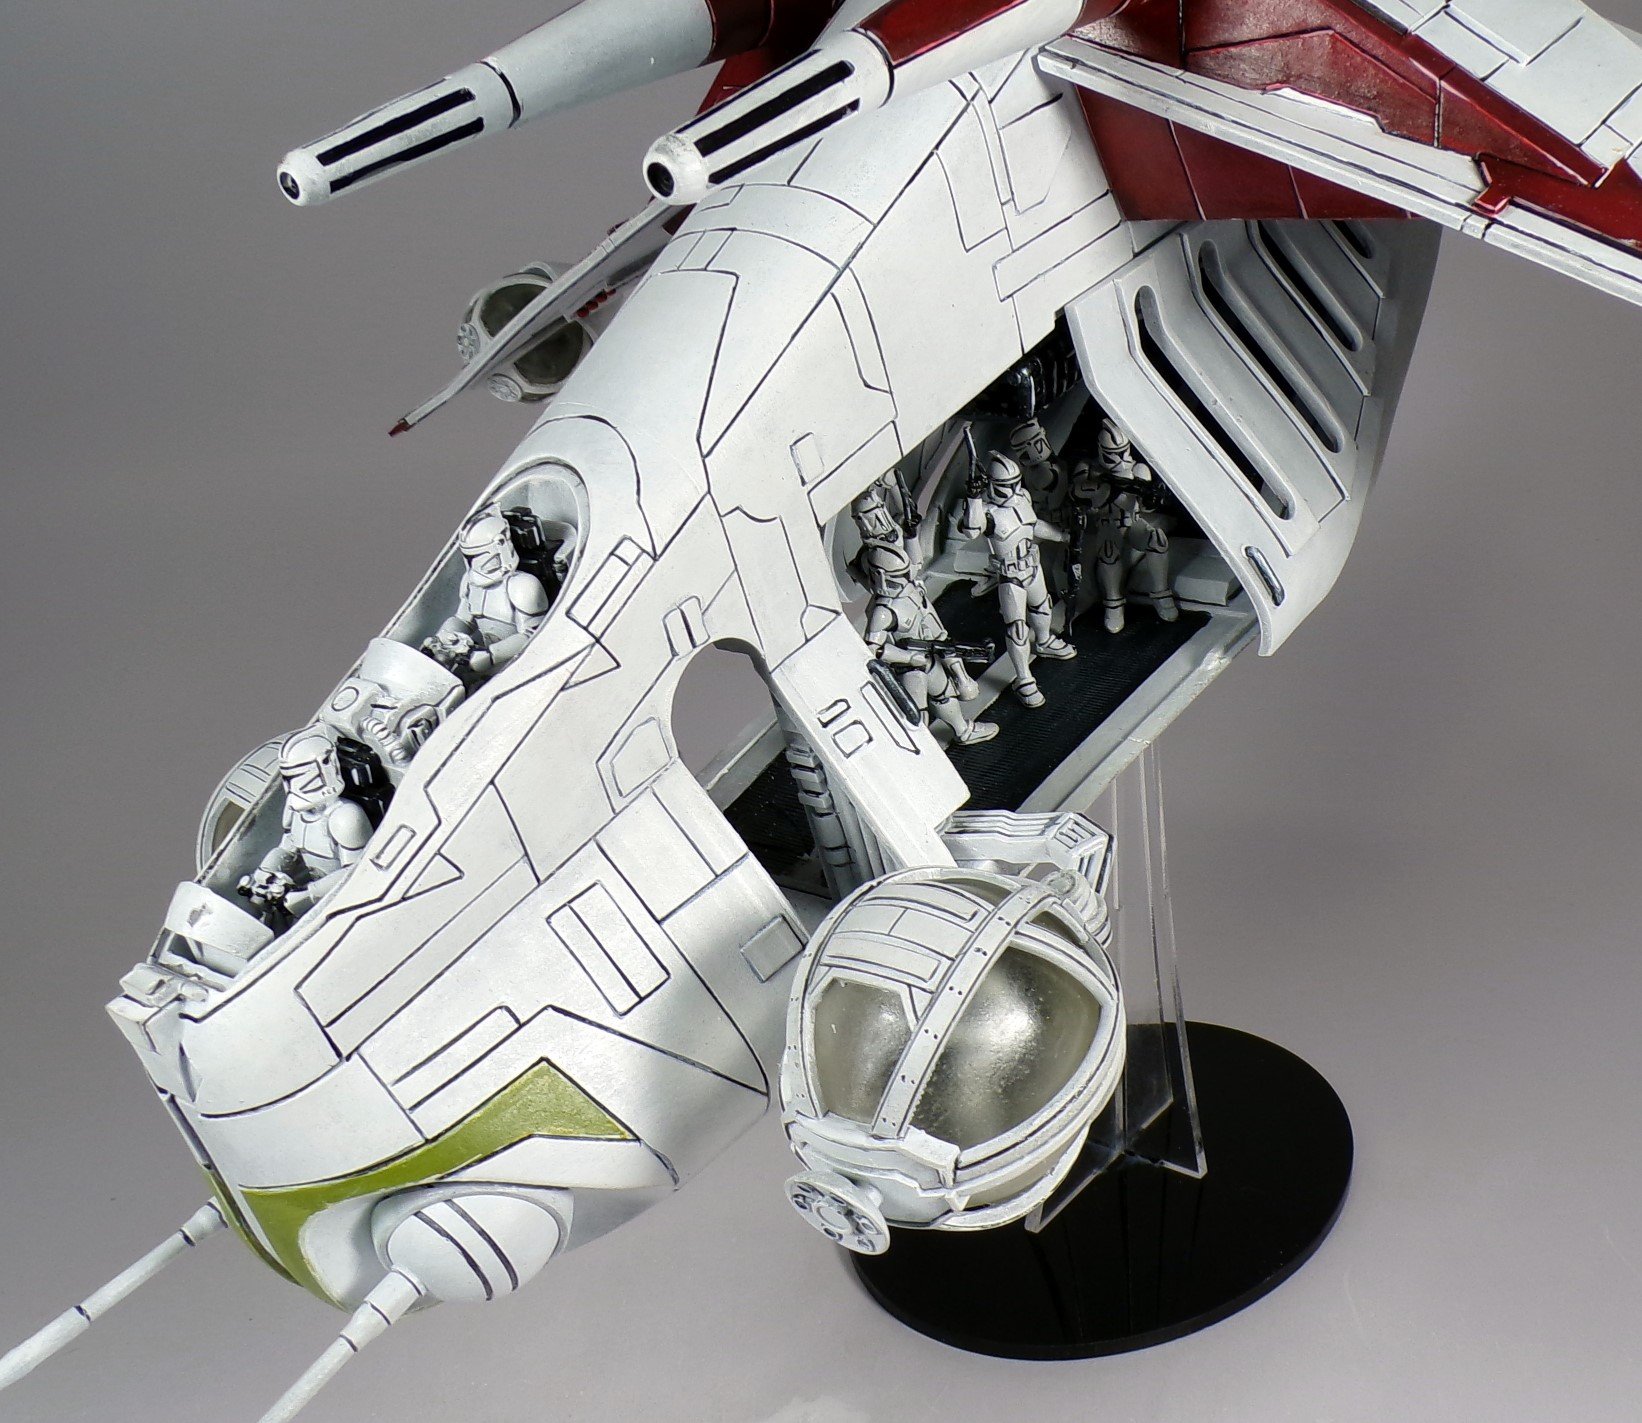 Paintedfigs Star Wars Legion Miniature Painting Service LAAT Republic Gunship (6).jpg